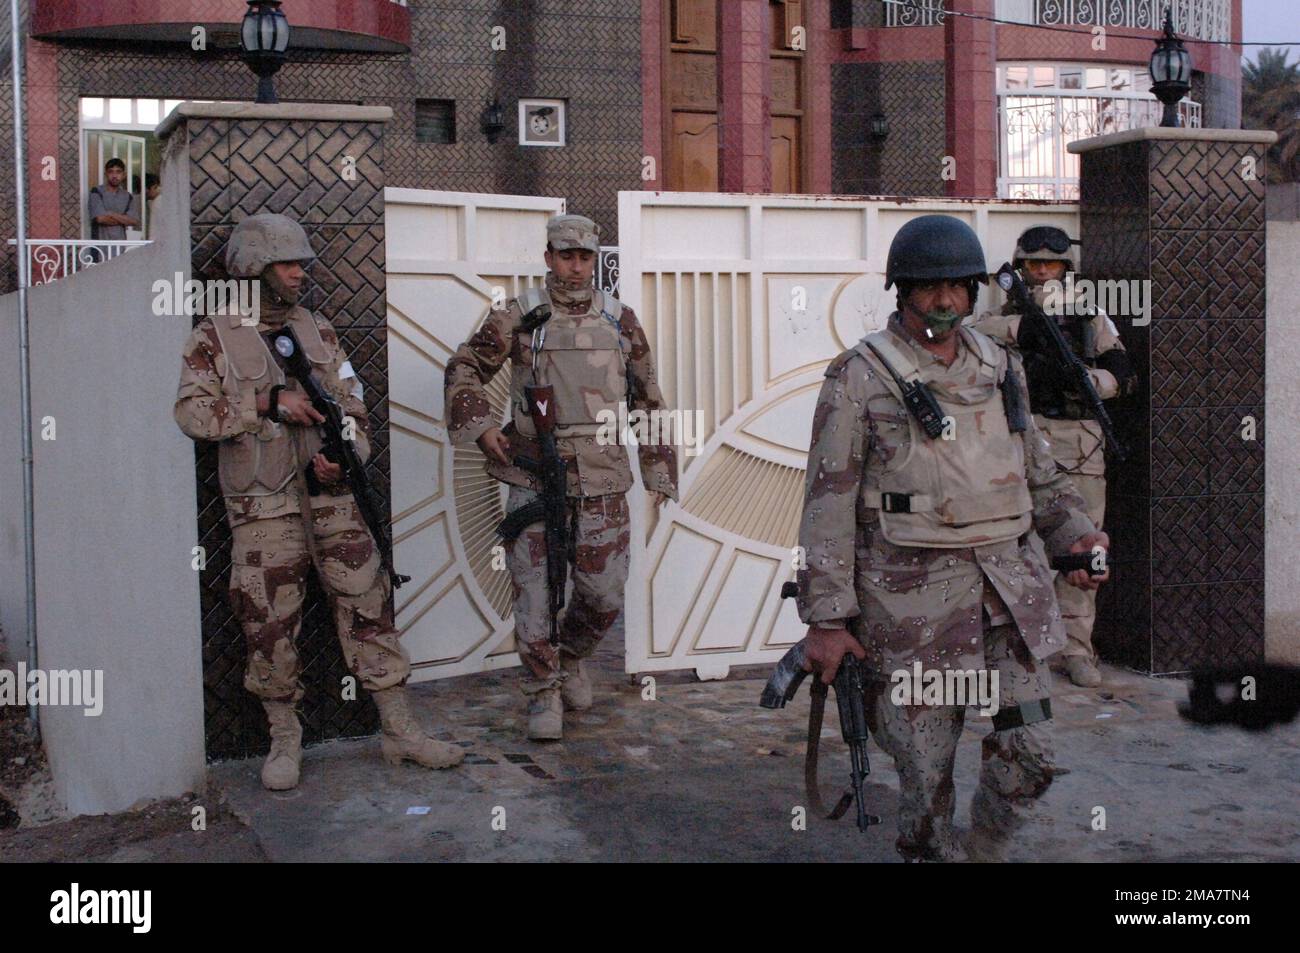 060129-A-6311S-020. Subject Operation/Series: TAJI SHORE Base: Taji Country: Iraq (IRQ) Scene Major Command Shown: 1/6TH IRAQI ARMY Stock Photo